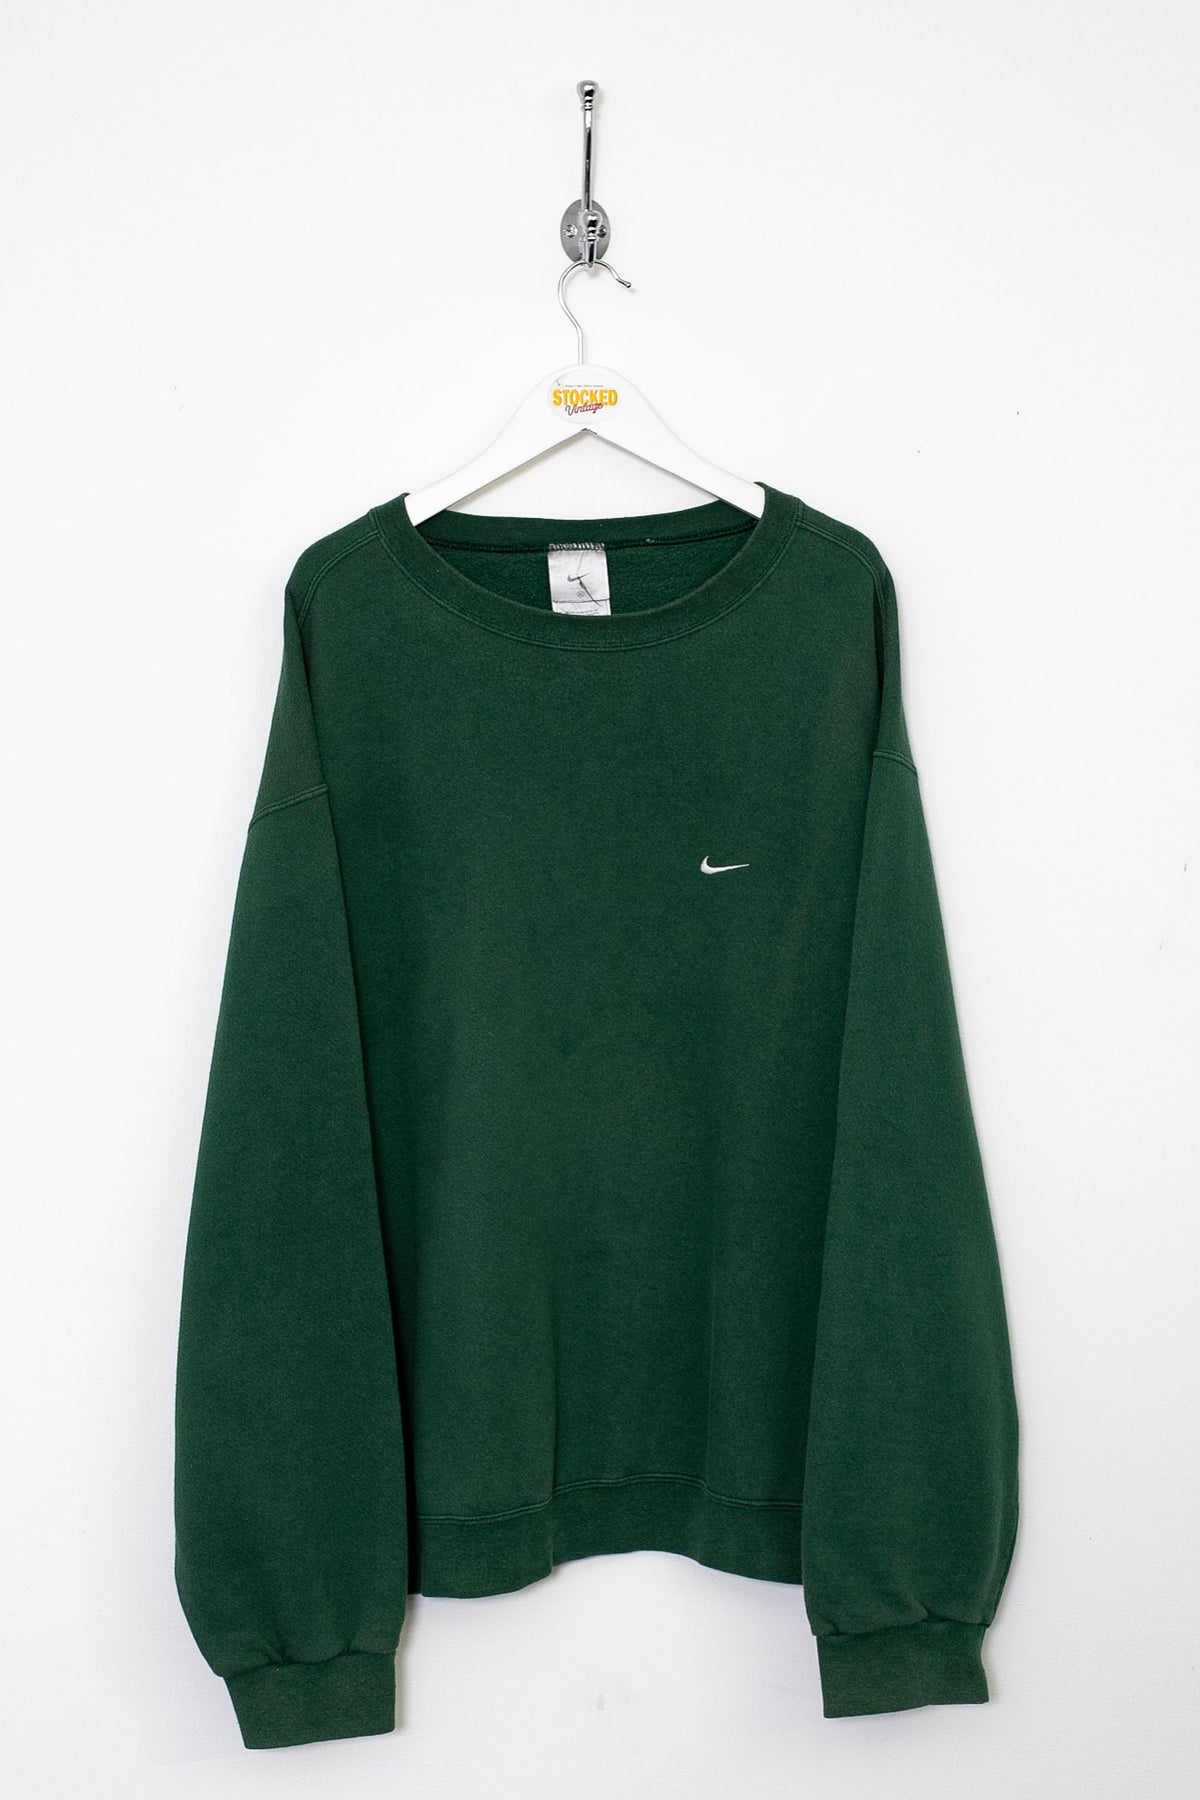 90s Nike Sweatshirt (XL)